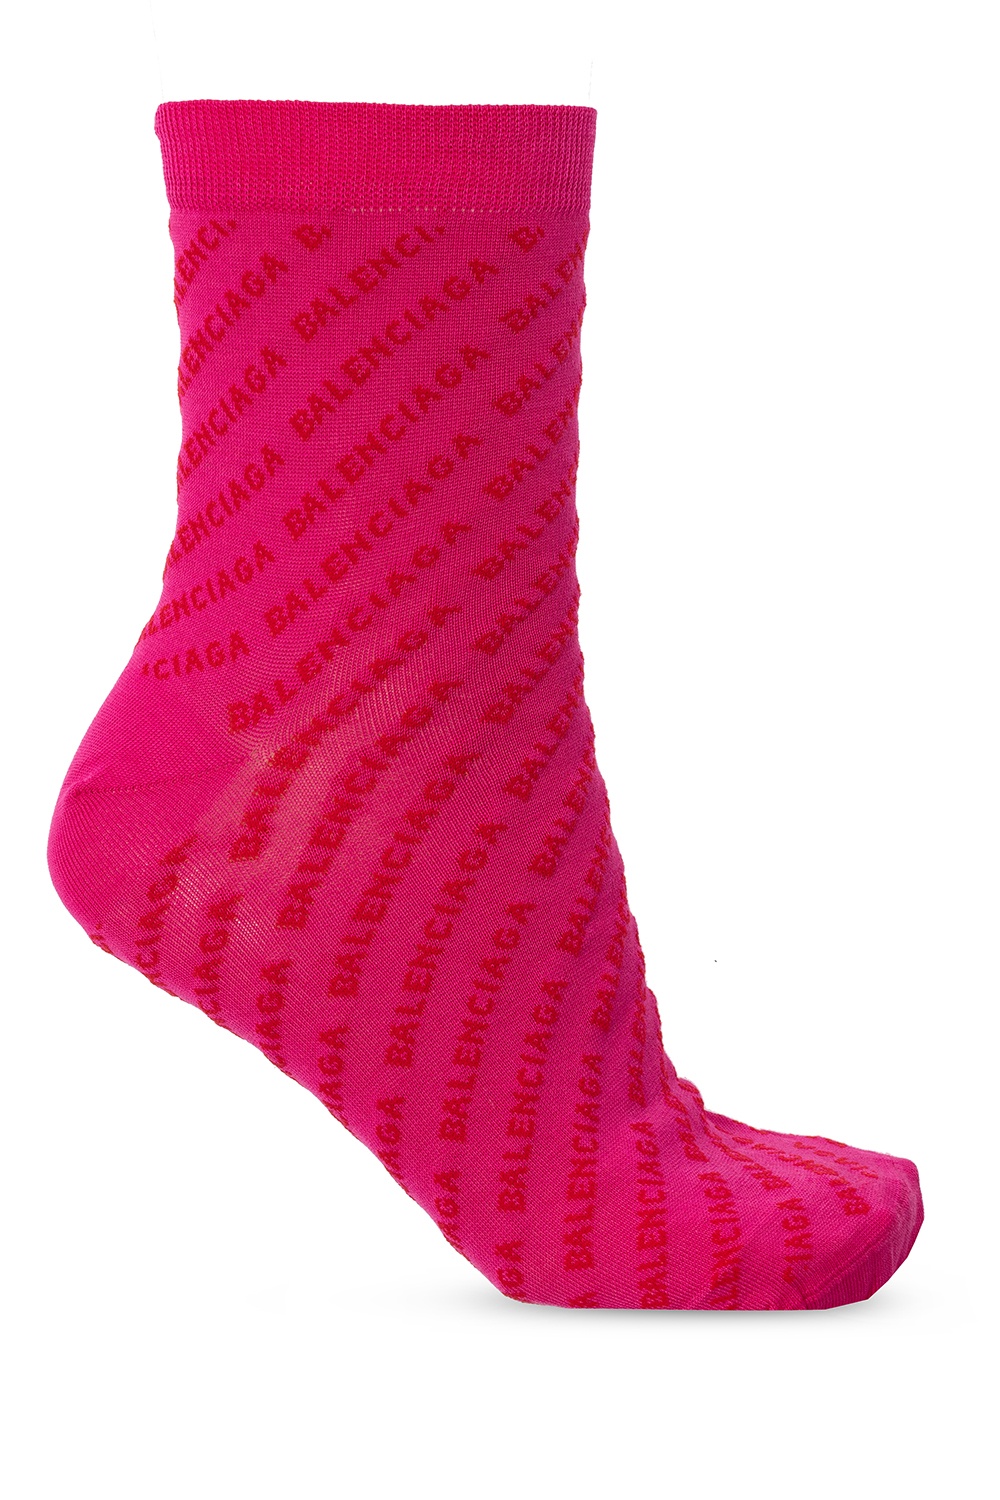 balenciaga pink socks